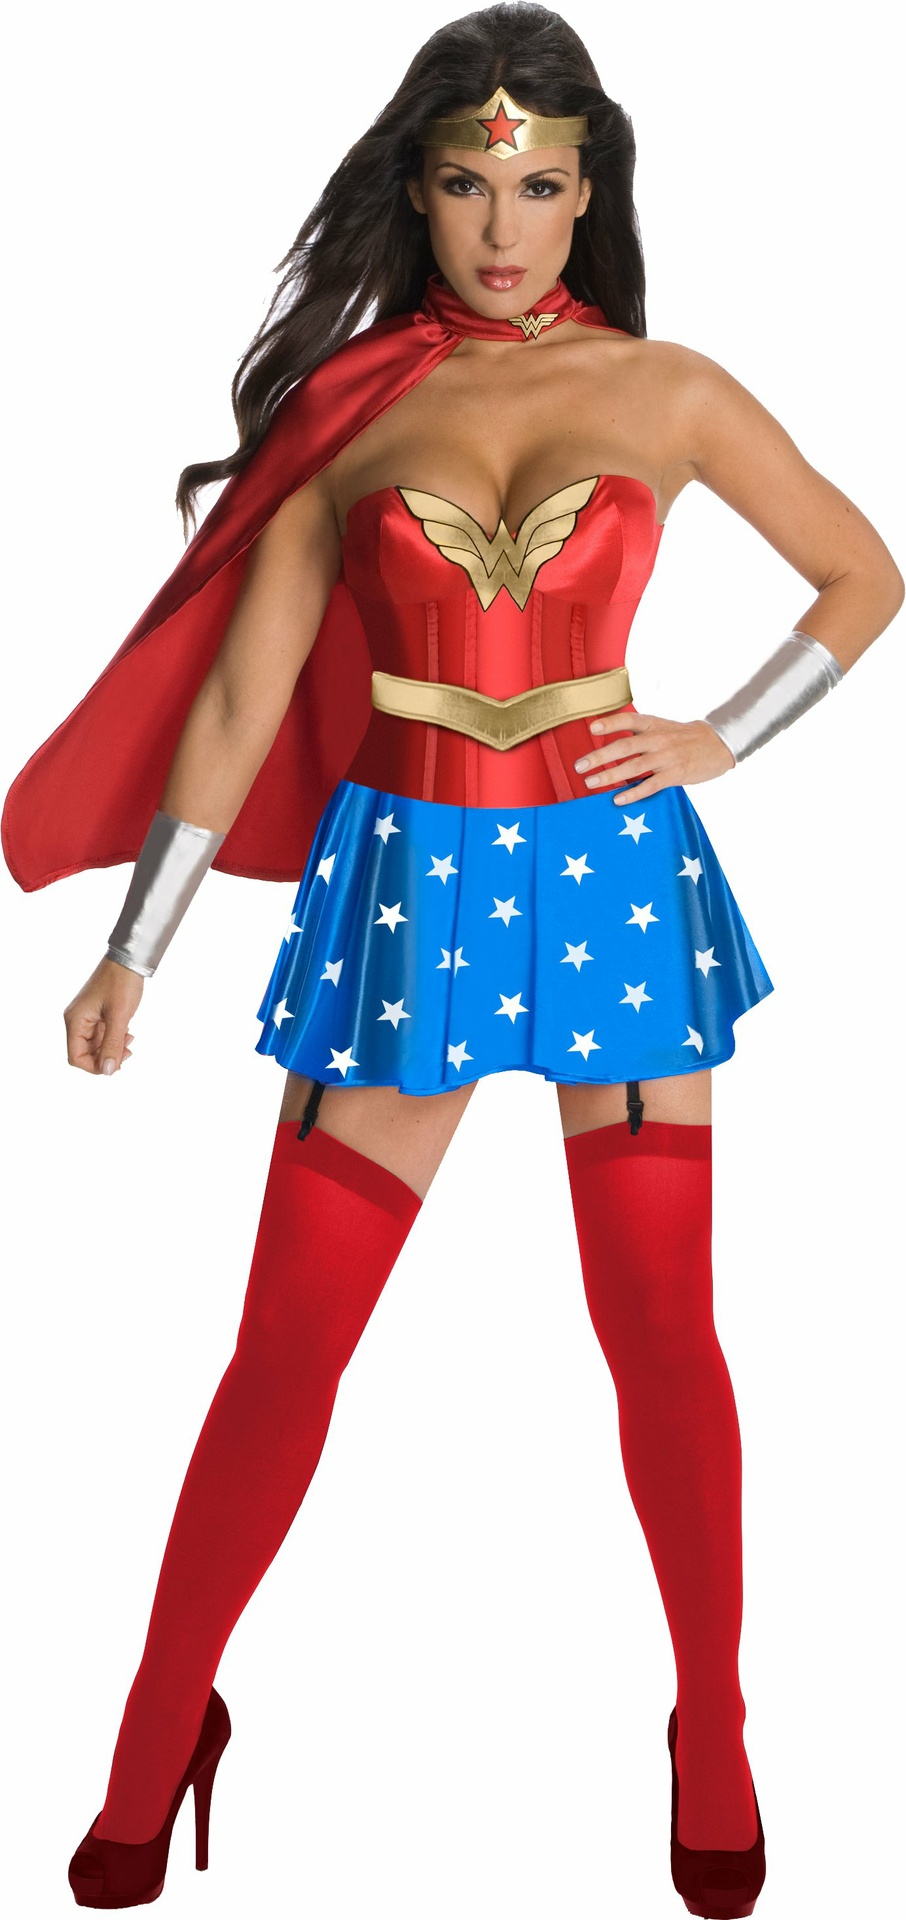 Adult Wonder Woman Costume 41